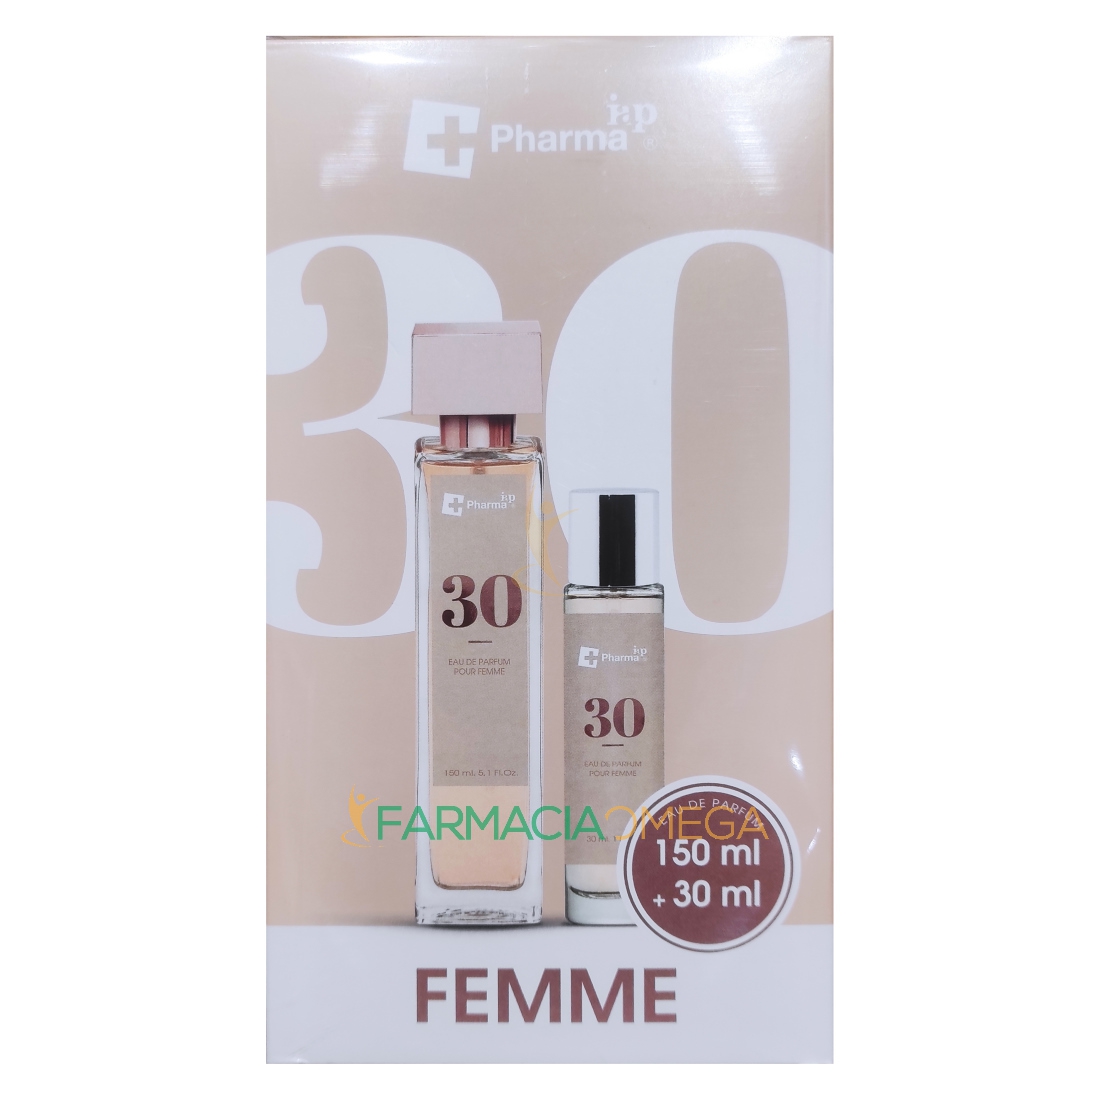 Iap Pharma Parfums Cofanetto Profumo Donna Fragranza 30 150ml+30ml.